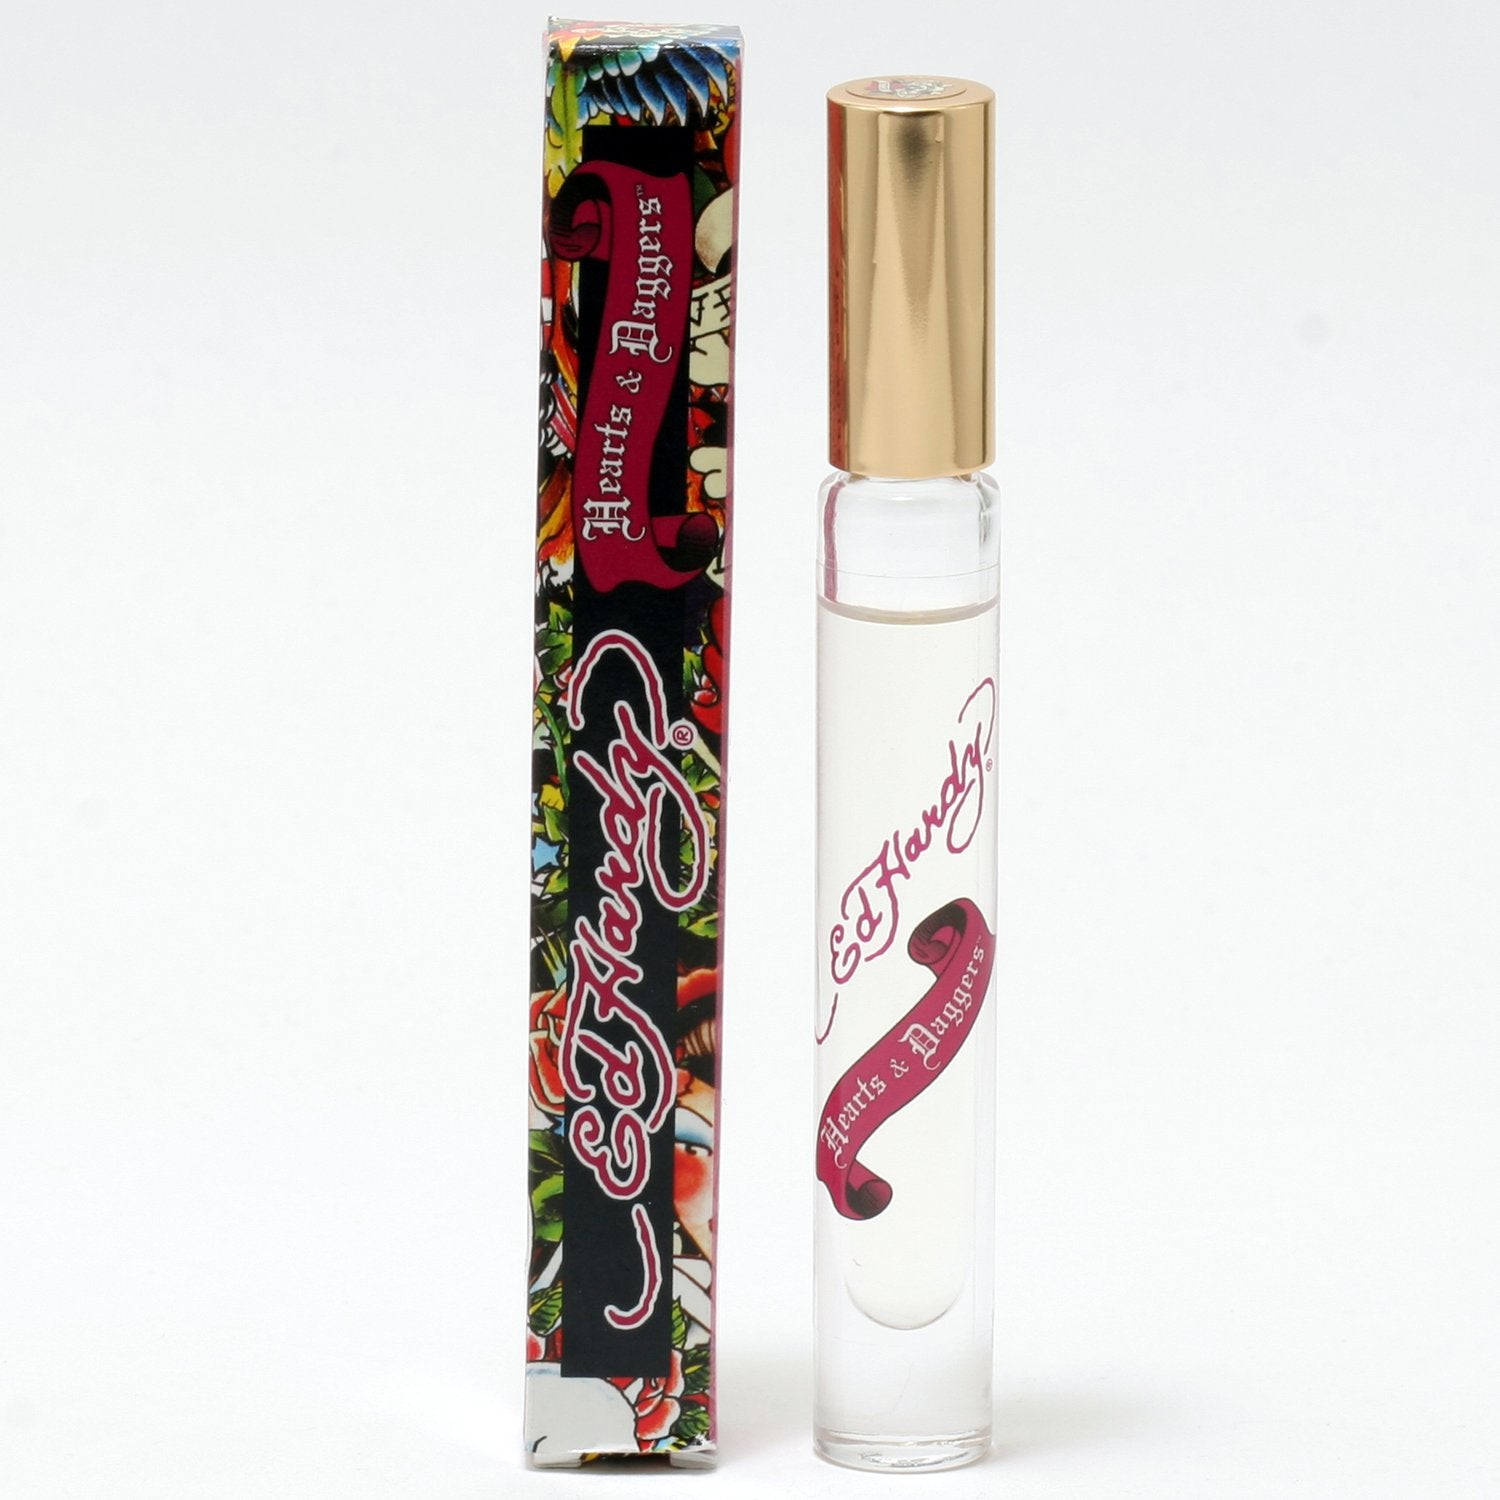 Perfume - HEARTS AND DAGGERS BY ED HARDY FOR WOMEN - PERFUME PEN MINI, 0.27 OZ